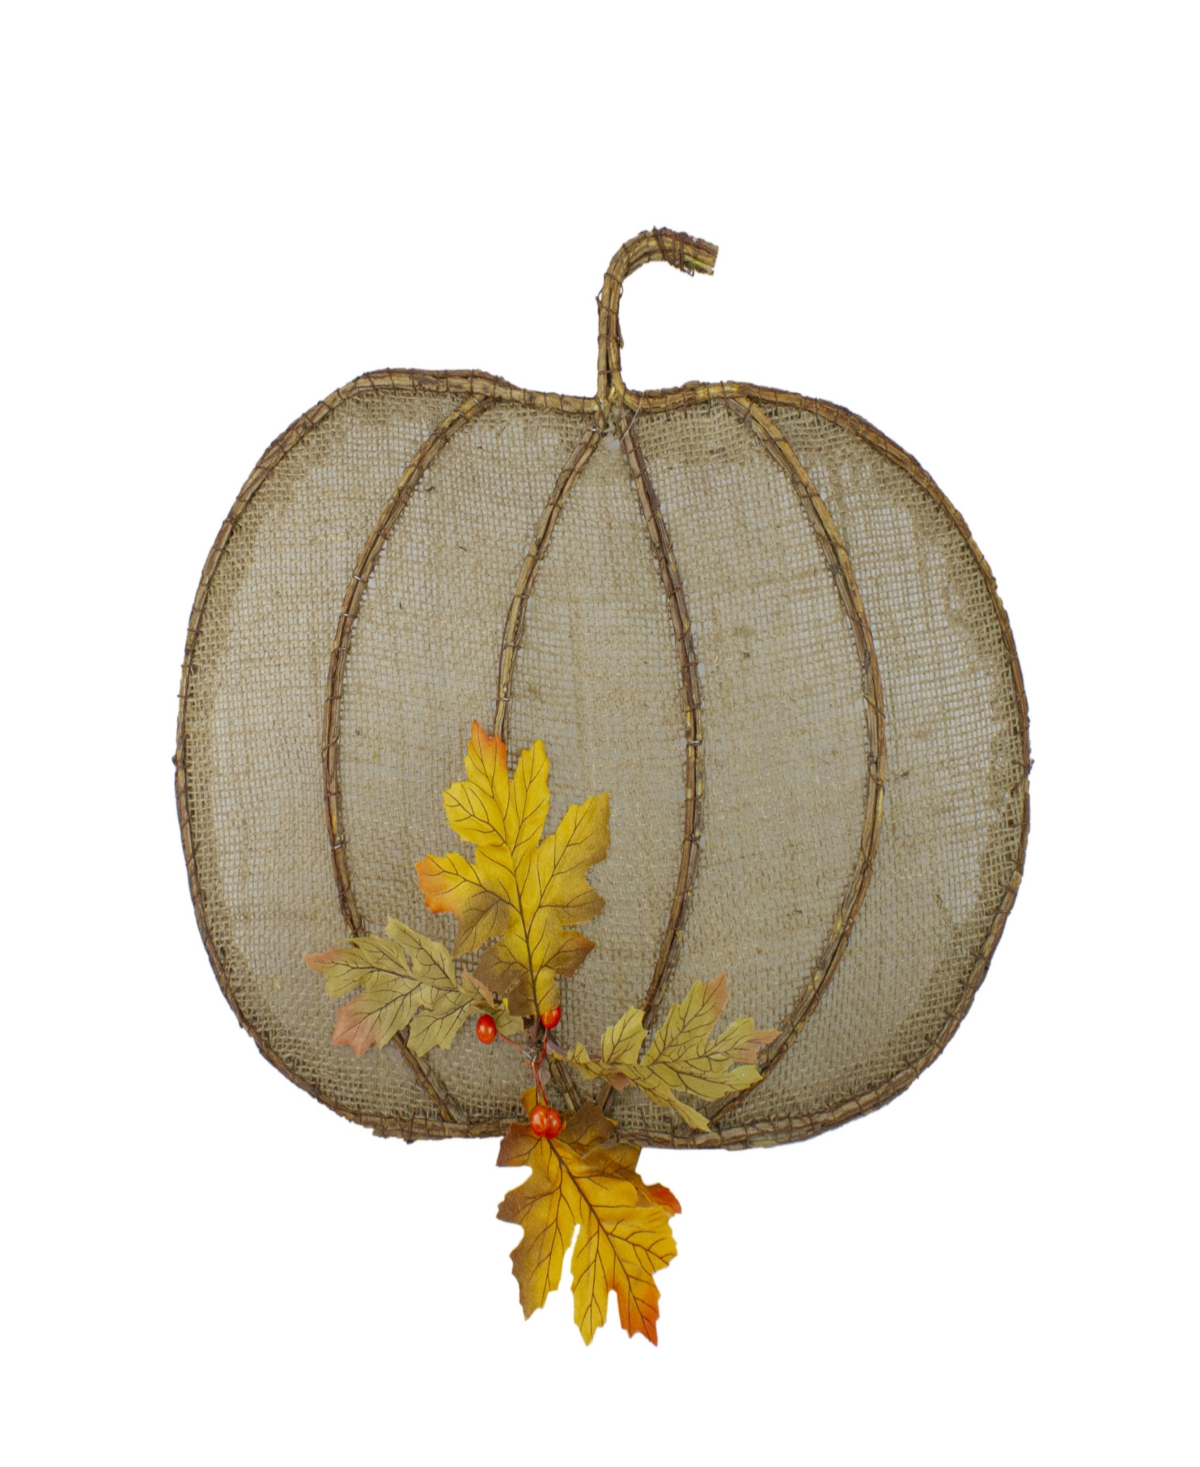 19" Beige Burlap and Vine Pumpkin Fall Harvest Wall Hanging - Beige